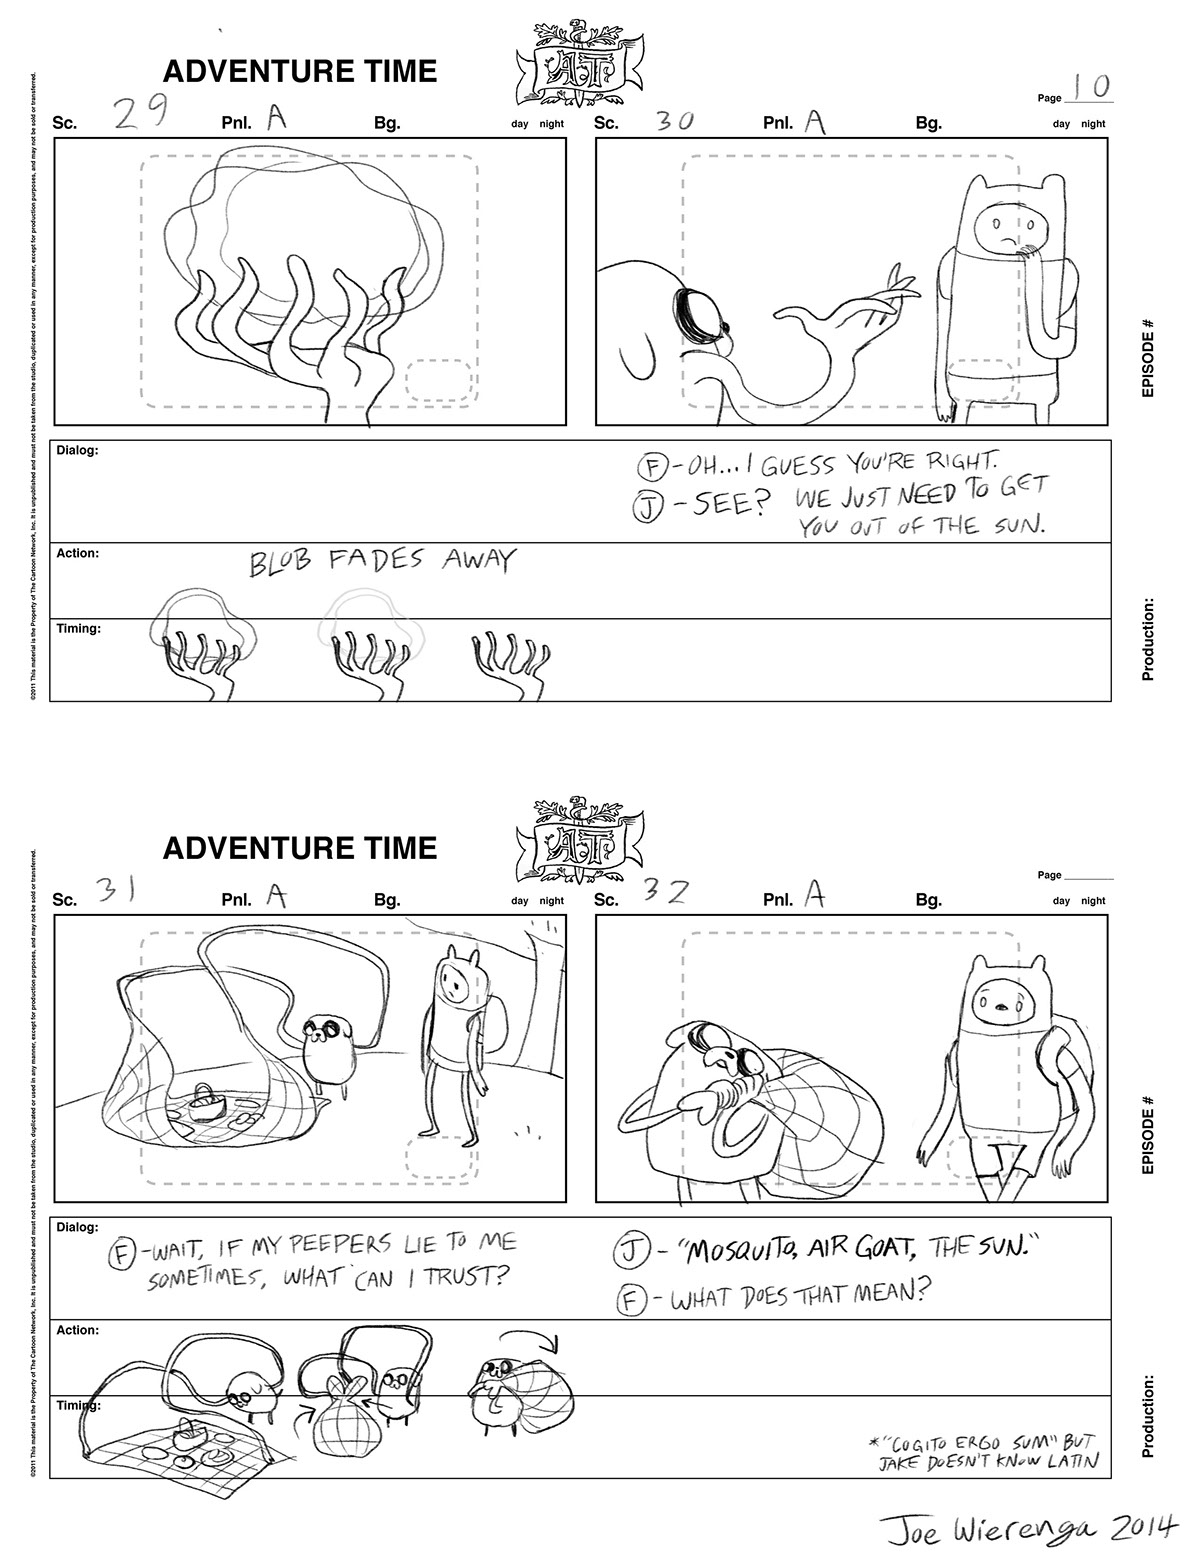 Adventure Time cartoon network